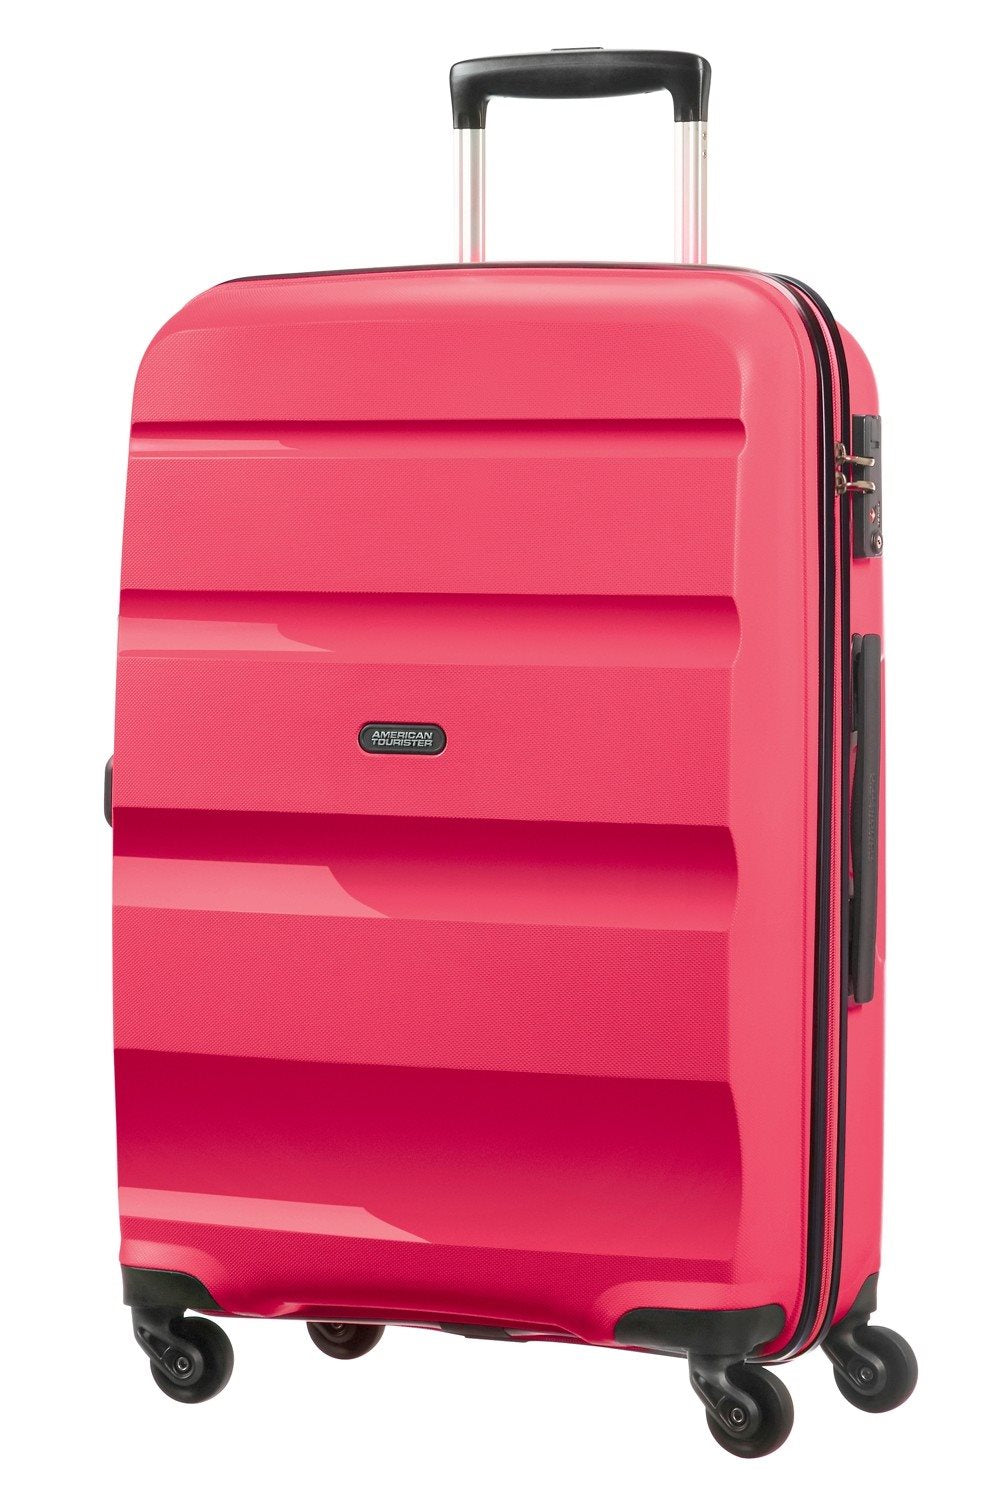 American Tourister Bon Air Spinner 66 cm Azalea Pink Ruimbagage Koffer - Reisartikelen-nl